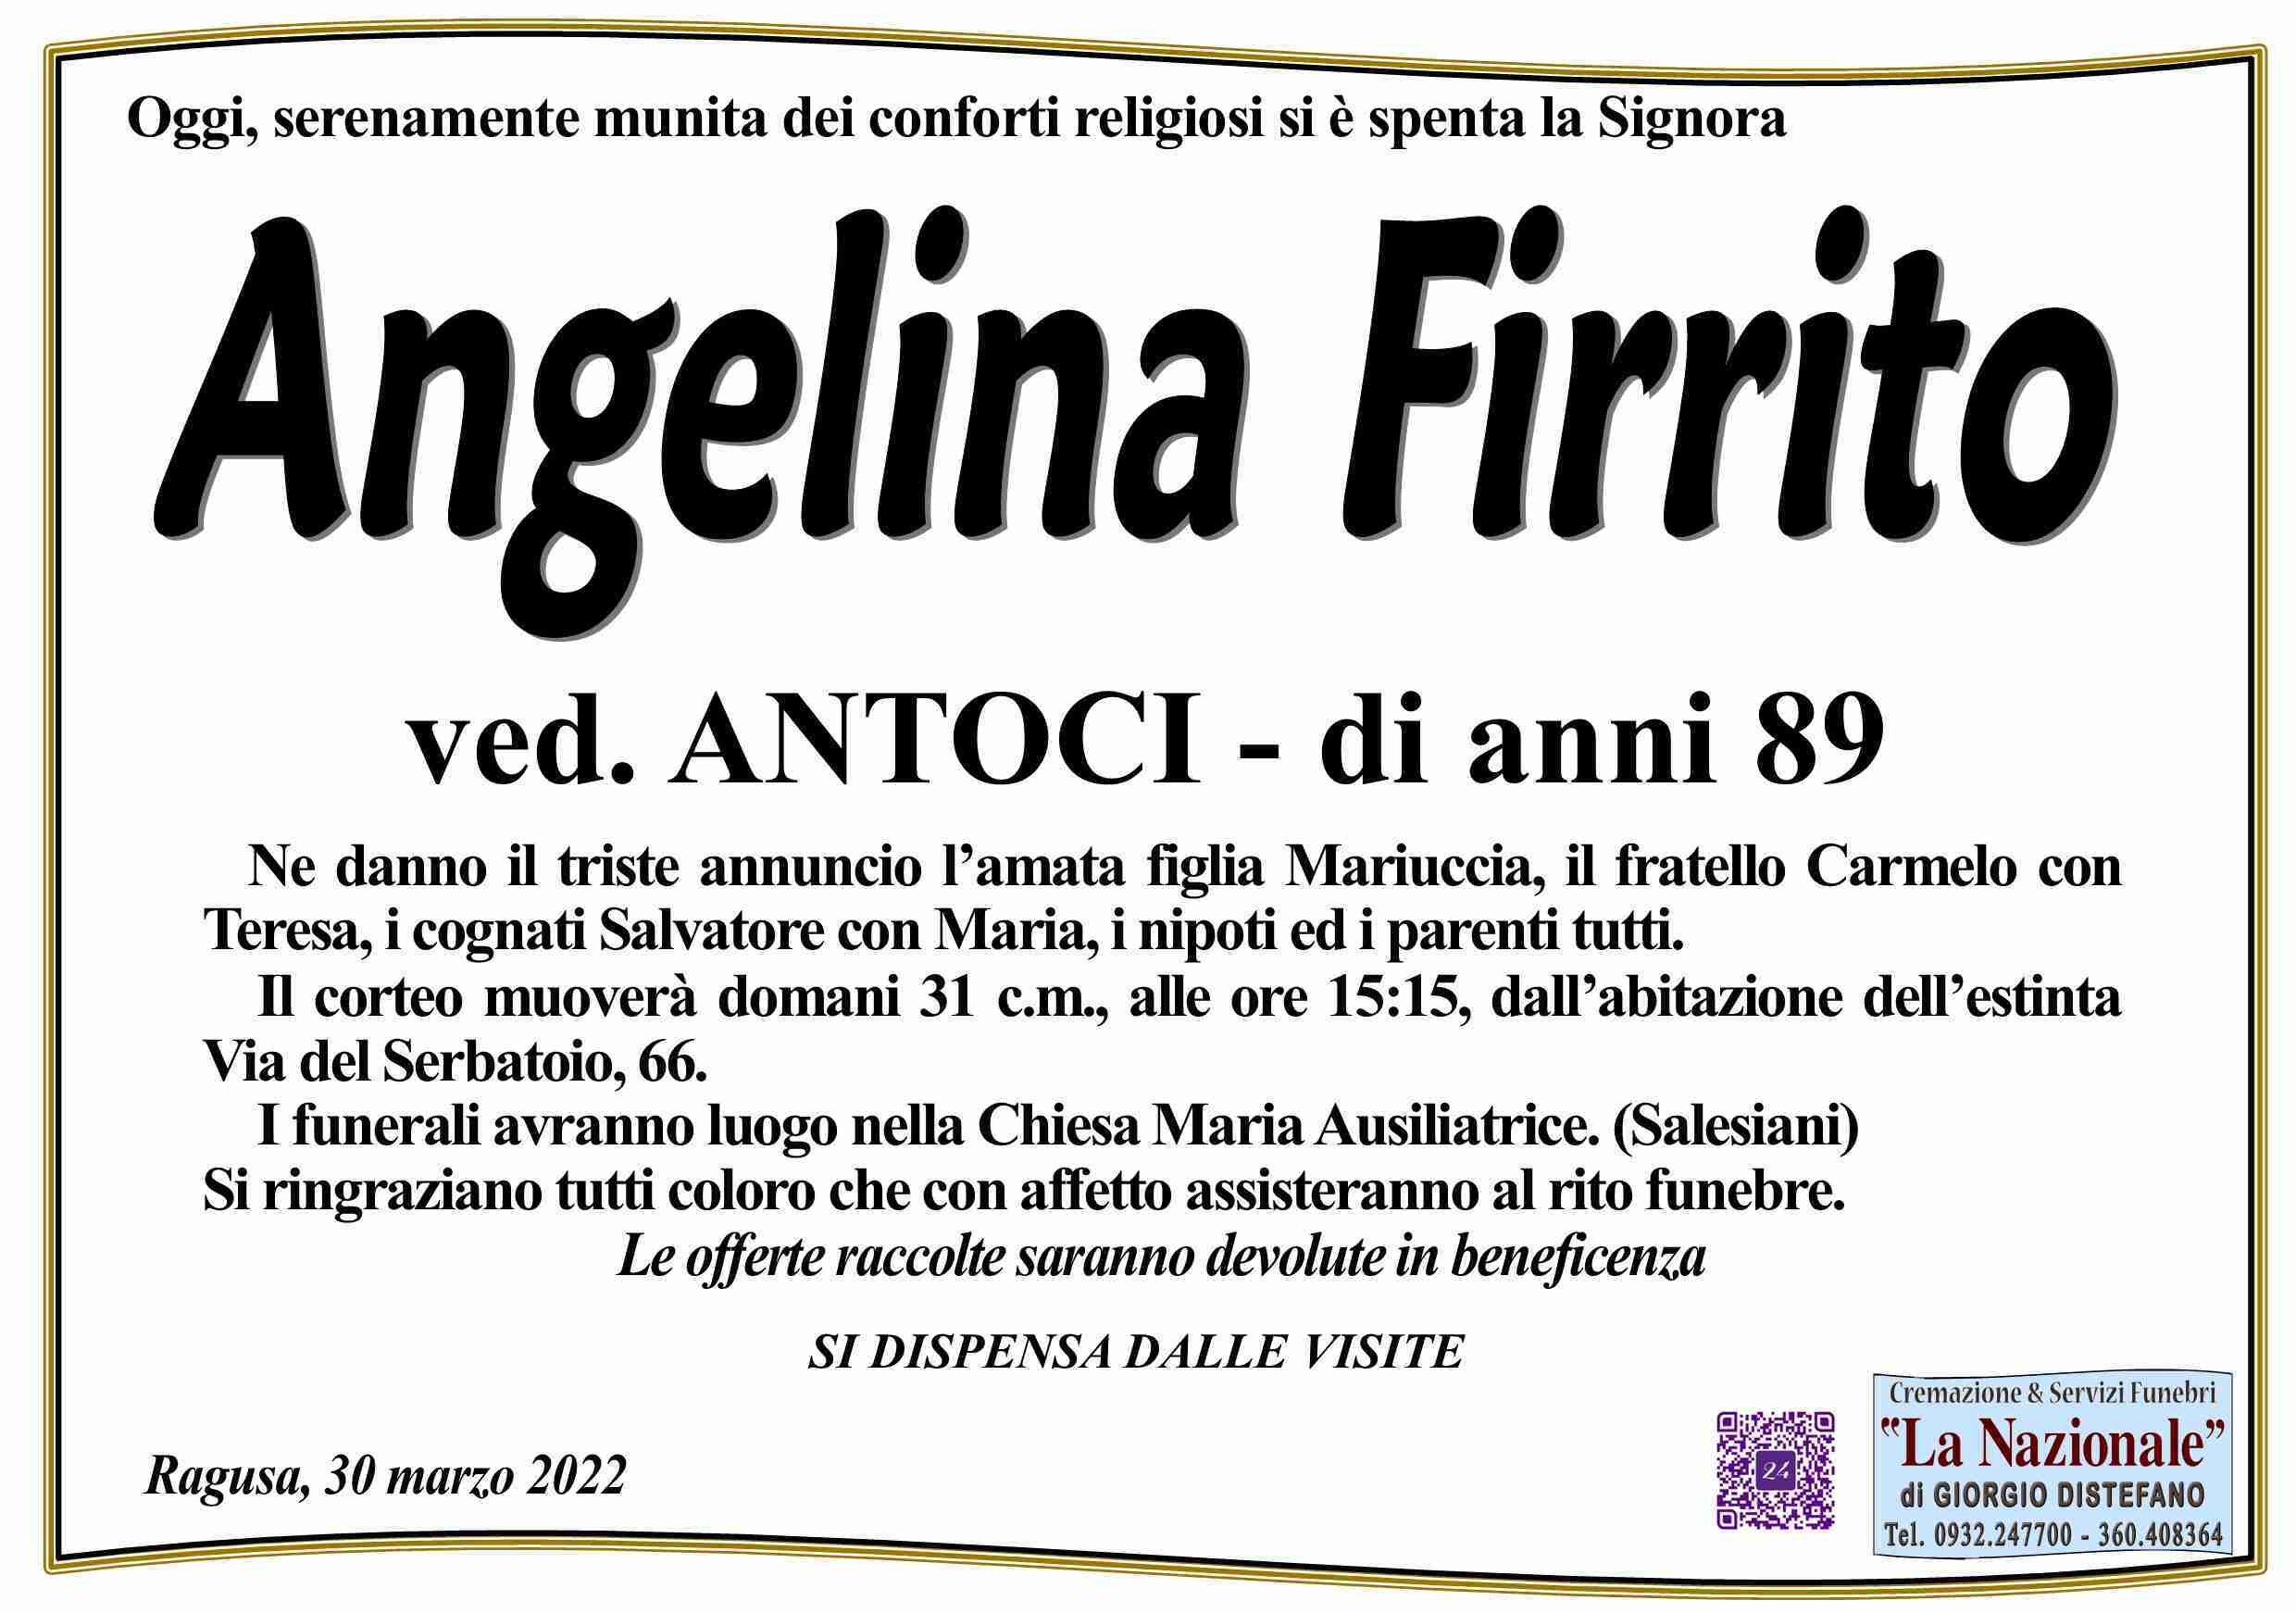 Angelina Firrito